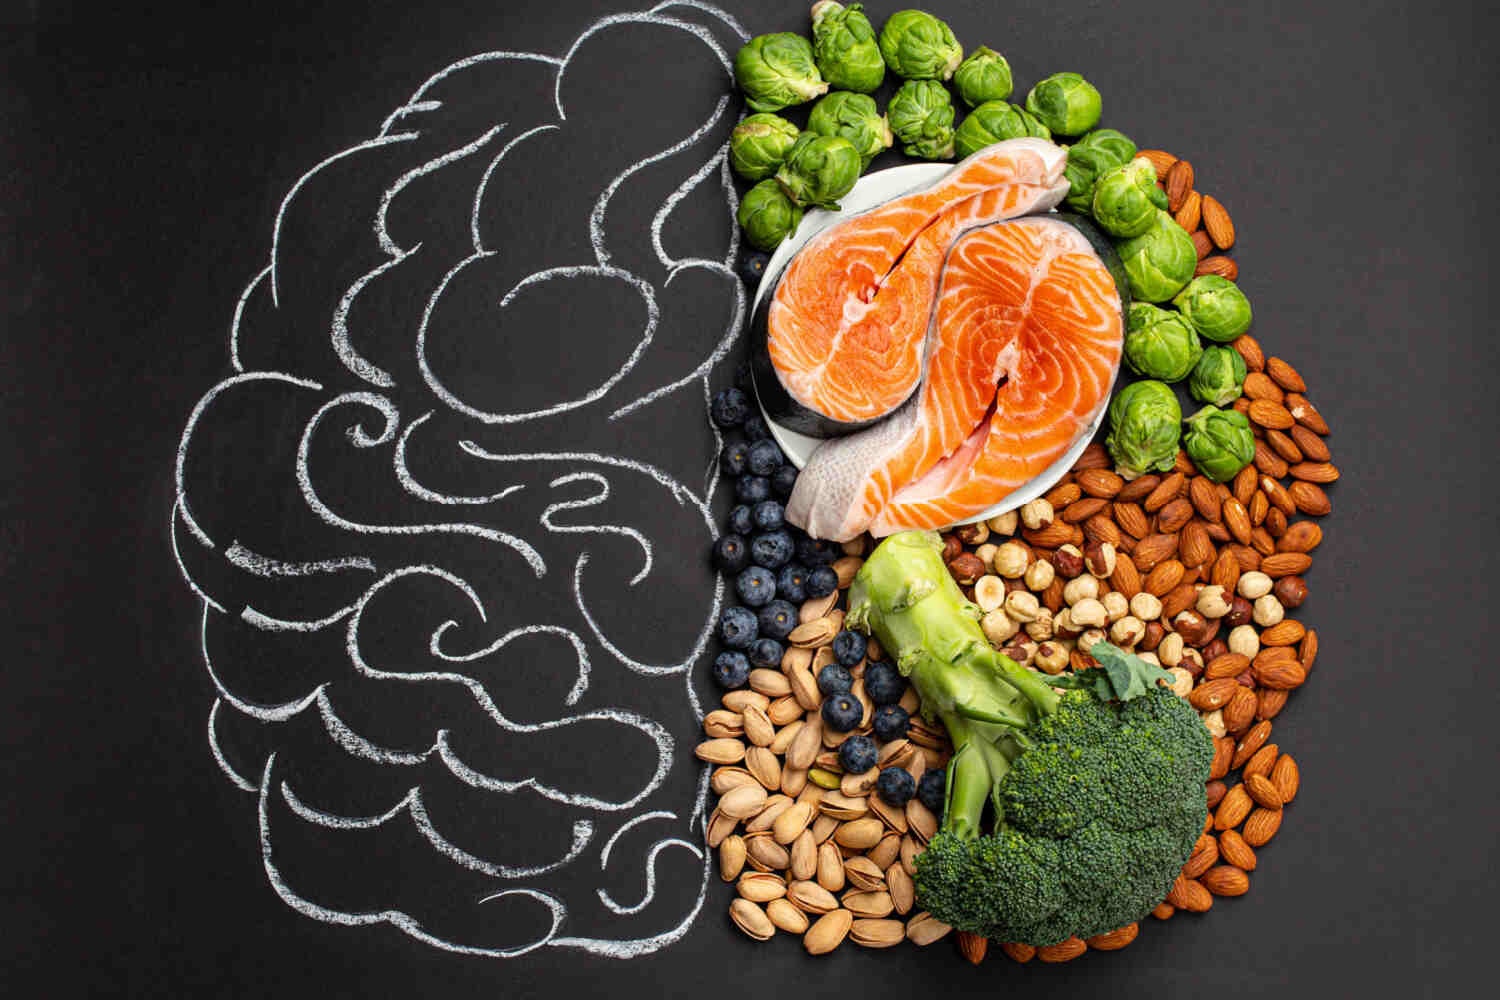 Balanced diet helps in brain development in toddlers